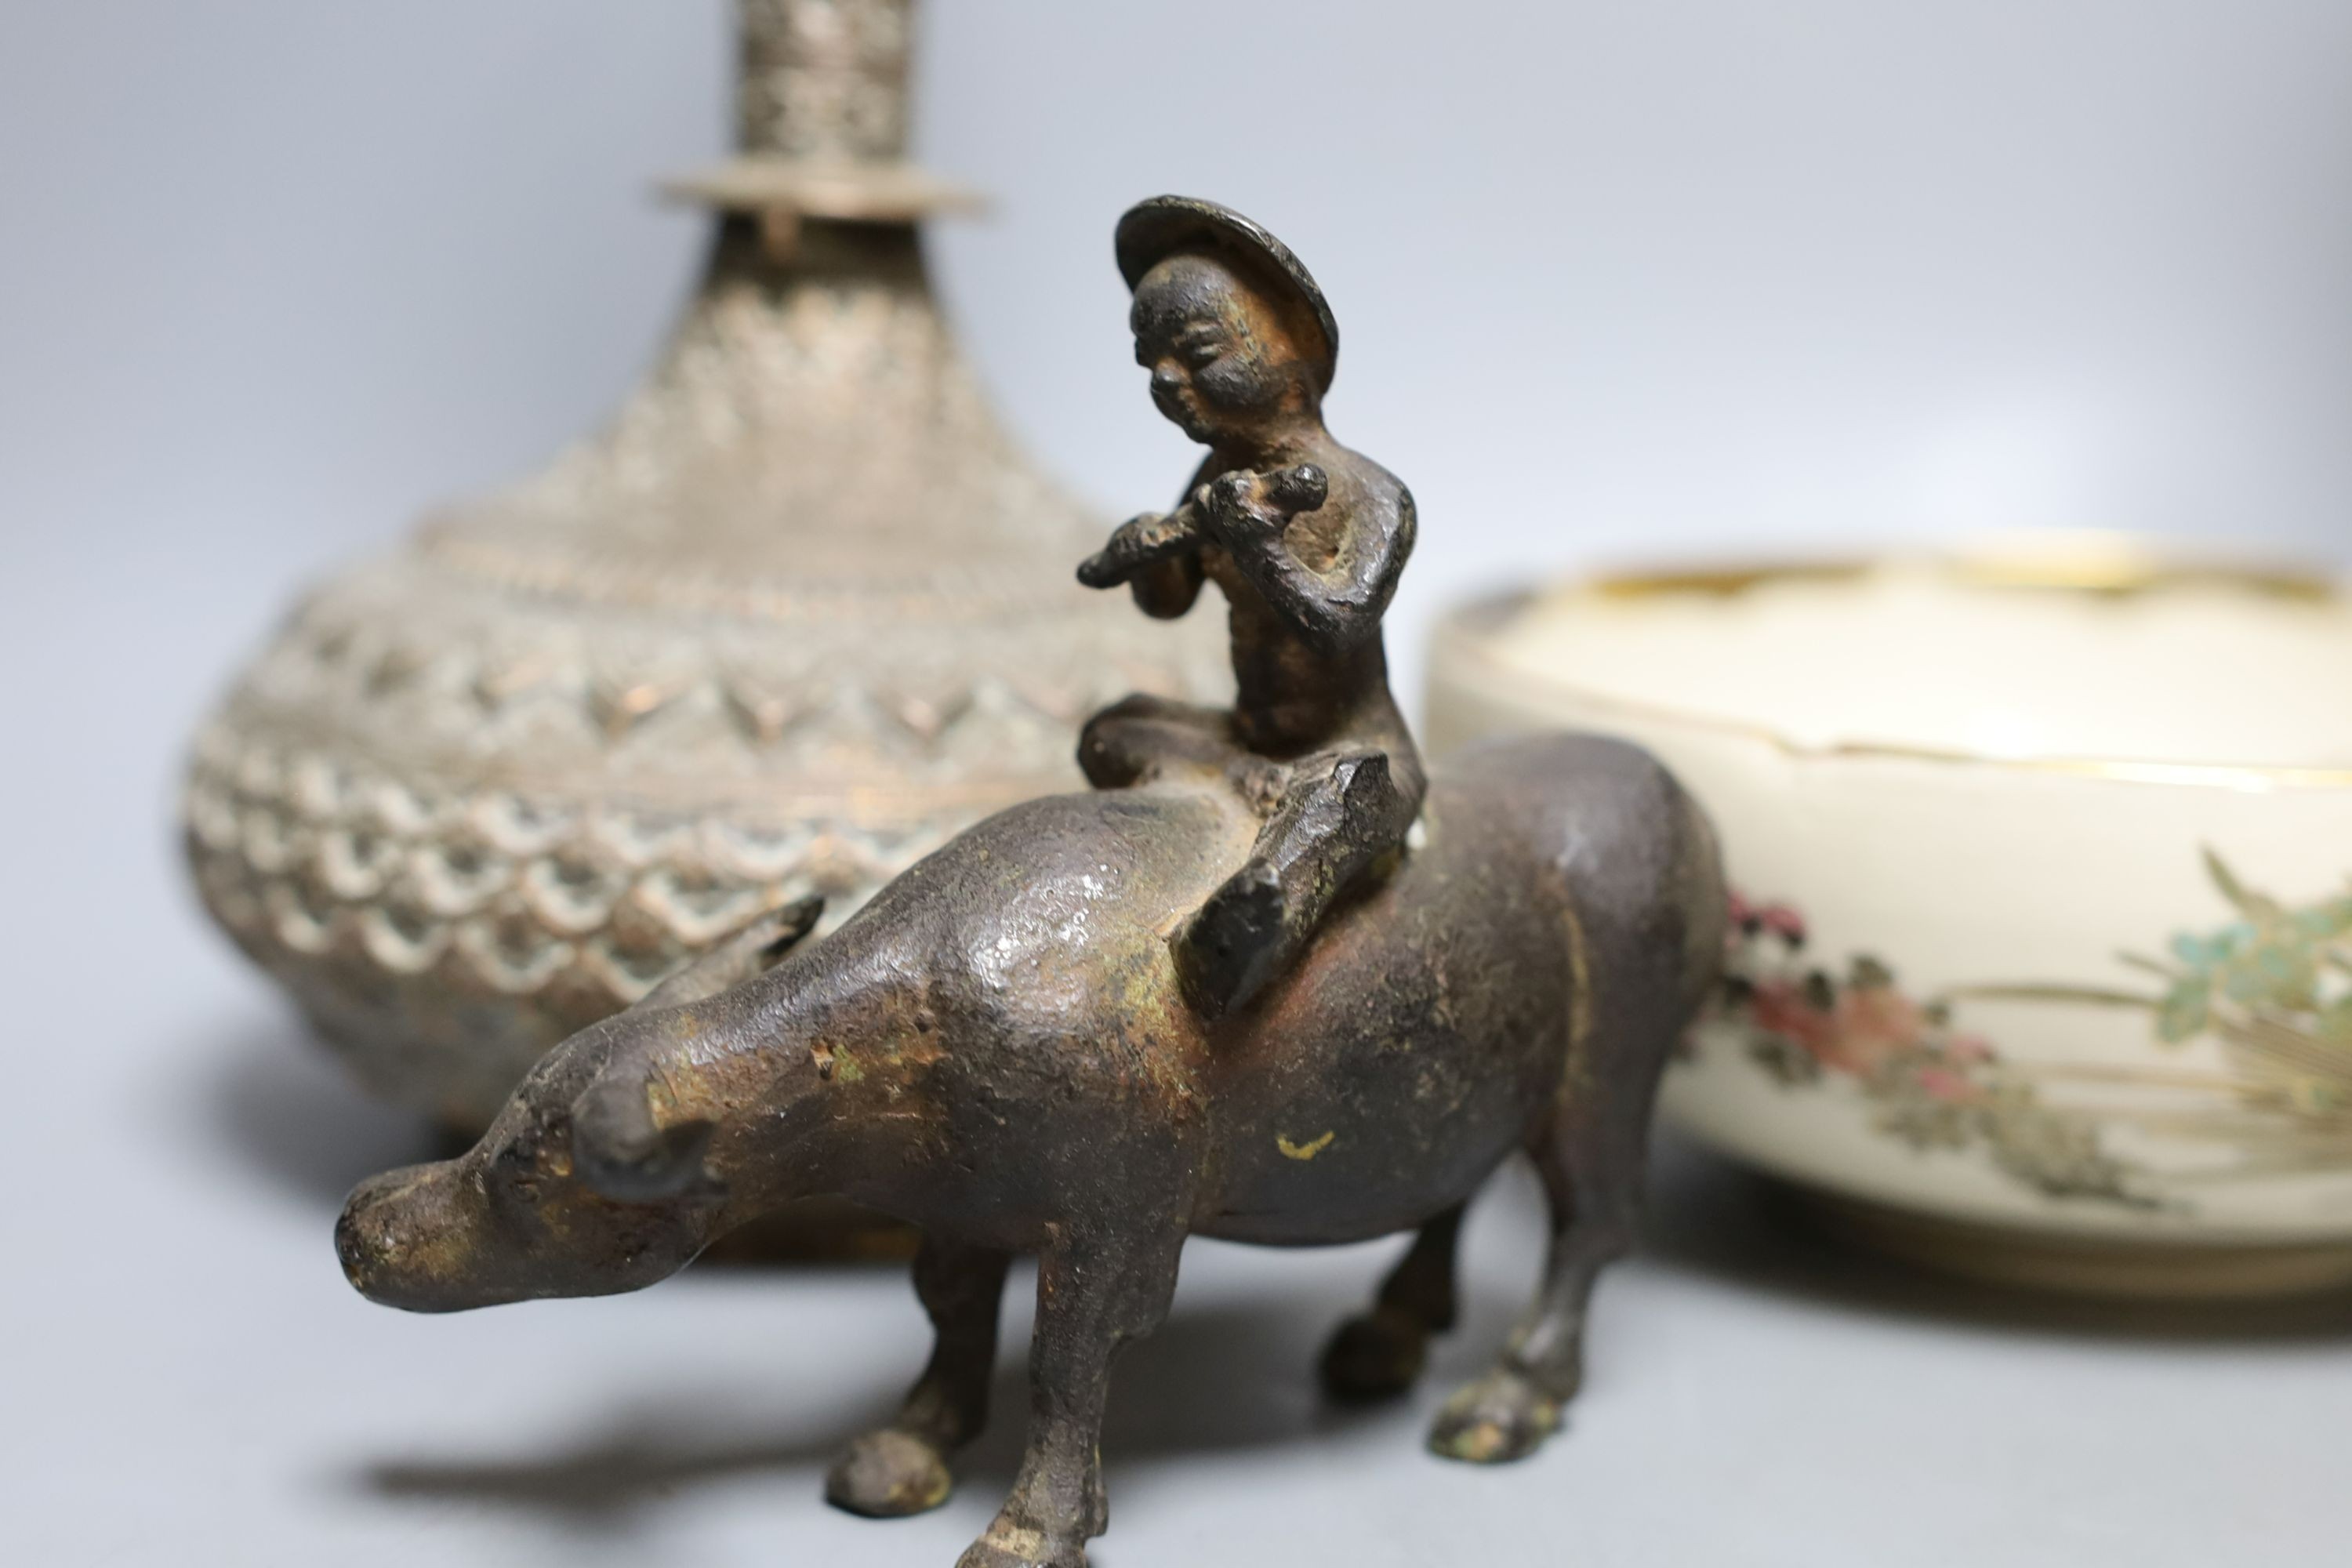 A Japanese bronze vase, an Islamic brass bottle, Chinese enamelled porcelain bowl, bronze group of man riding an ox. 29cm